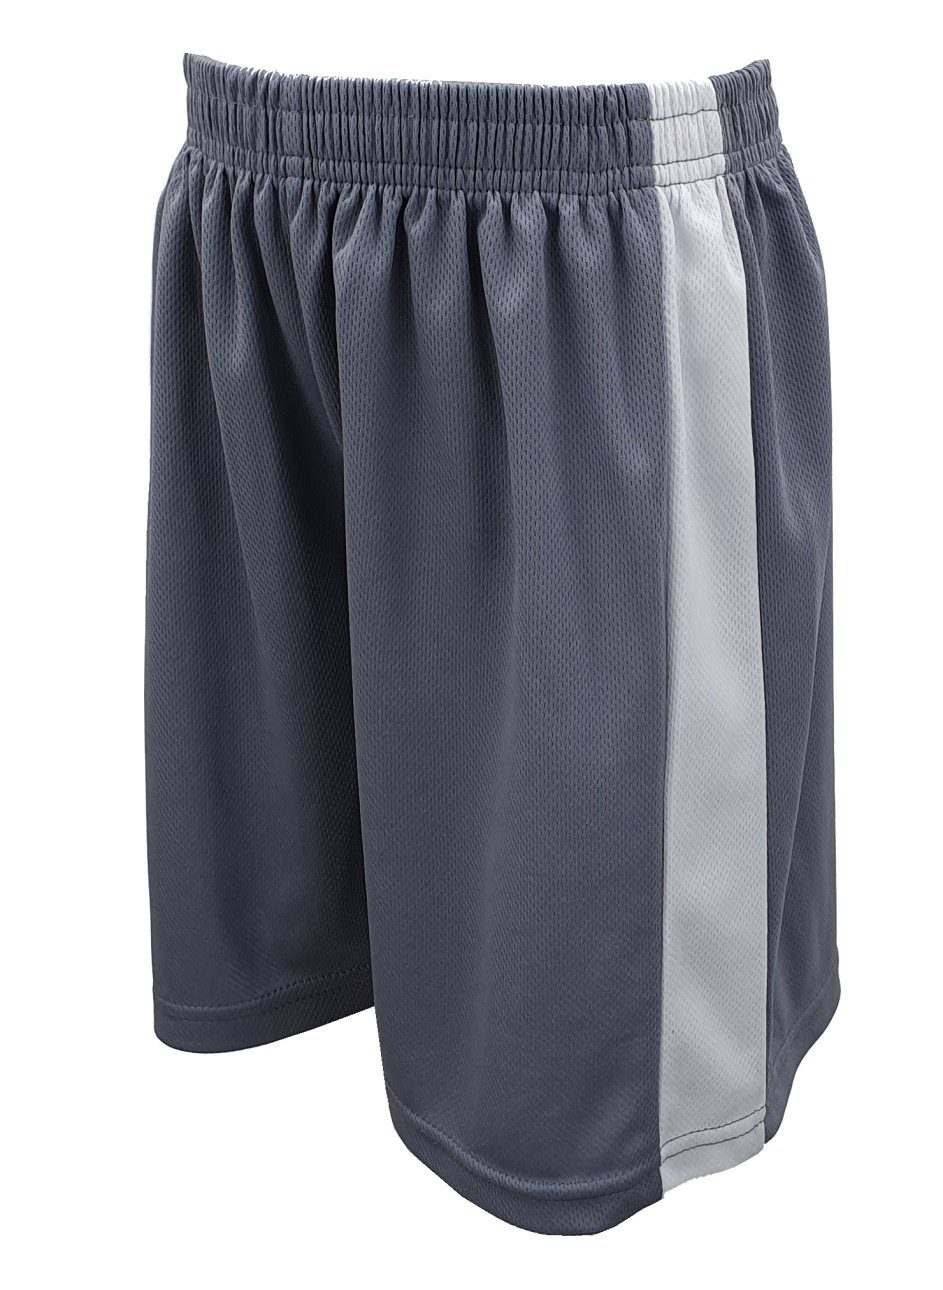 Fashion Boy T-Shirt & Shorts + Shorts, T-Shirt Jungen Set JS100 Sommer Grau